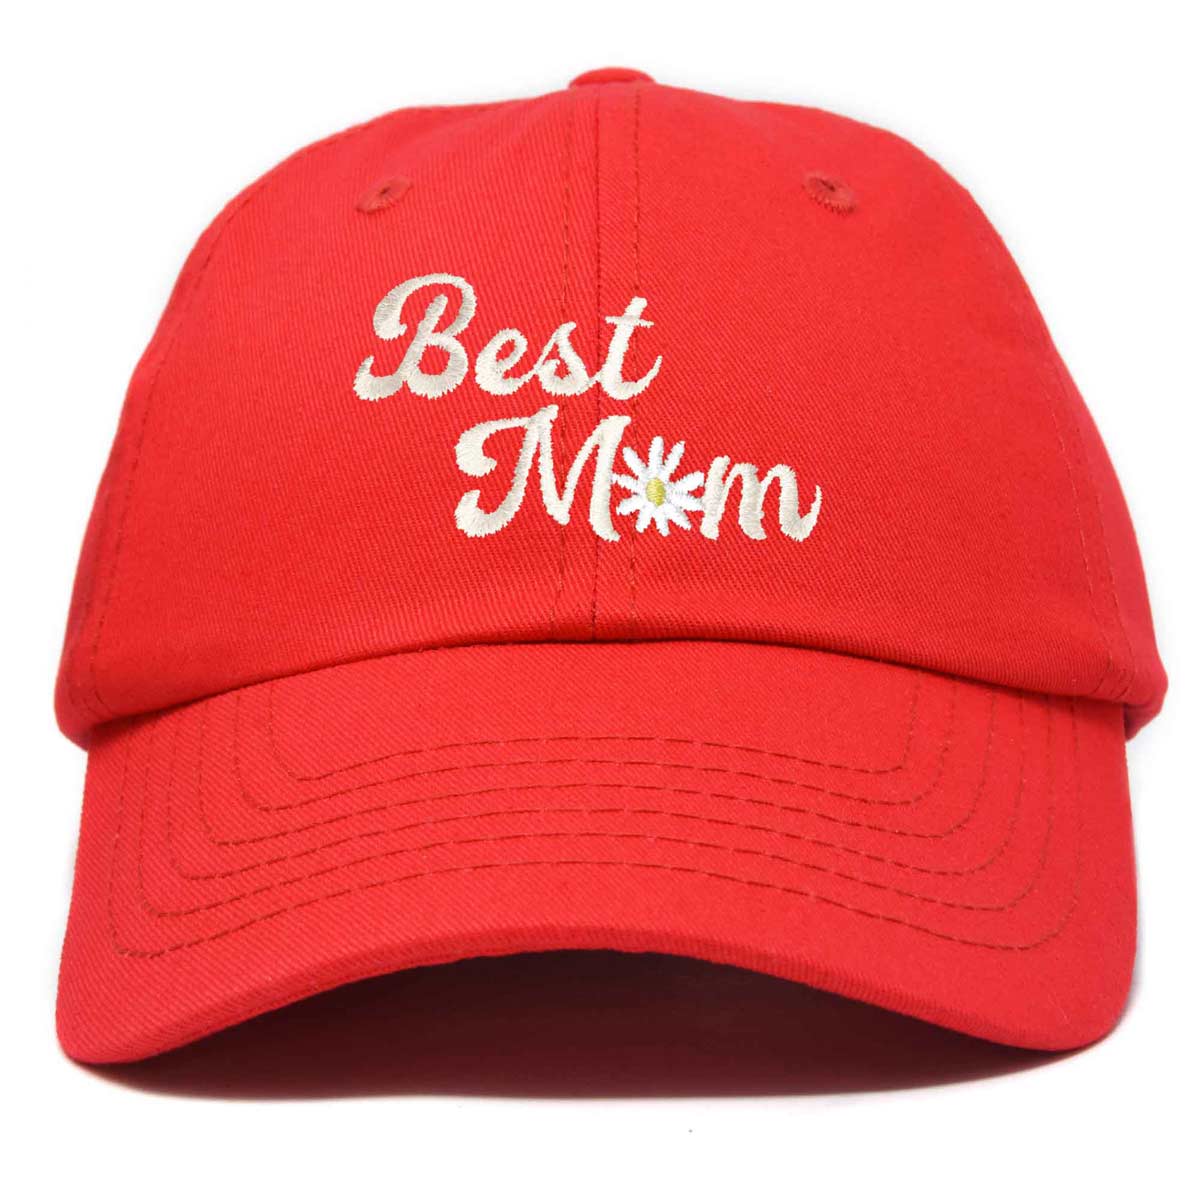 Dalix Daisy Best Mom Hat